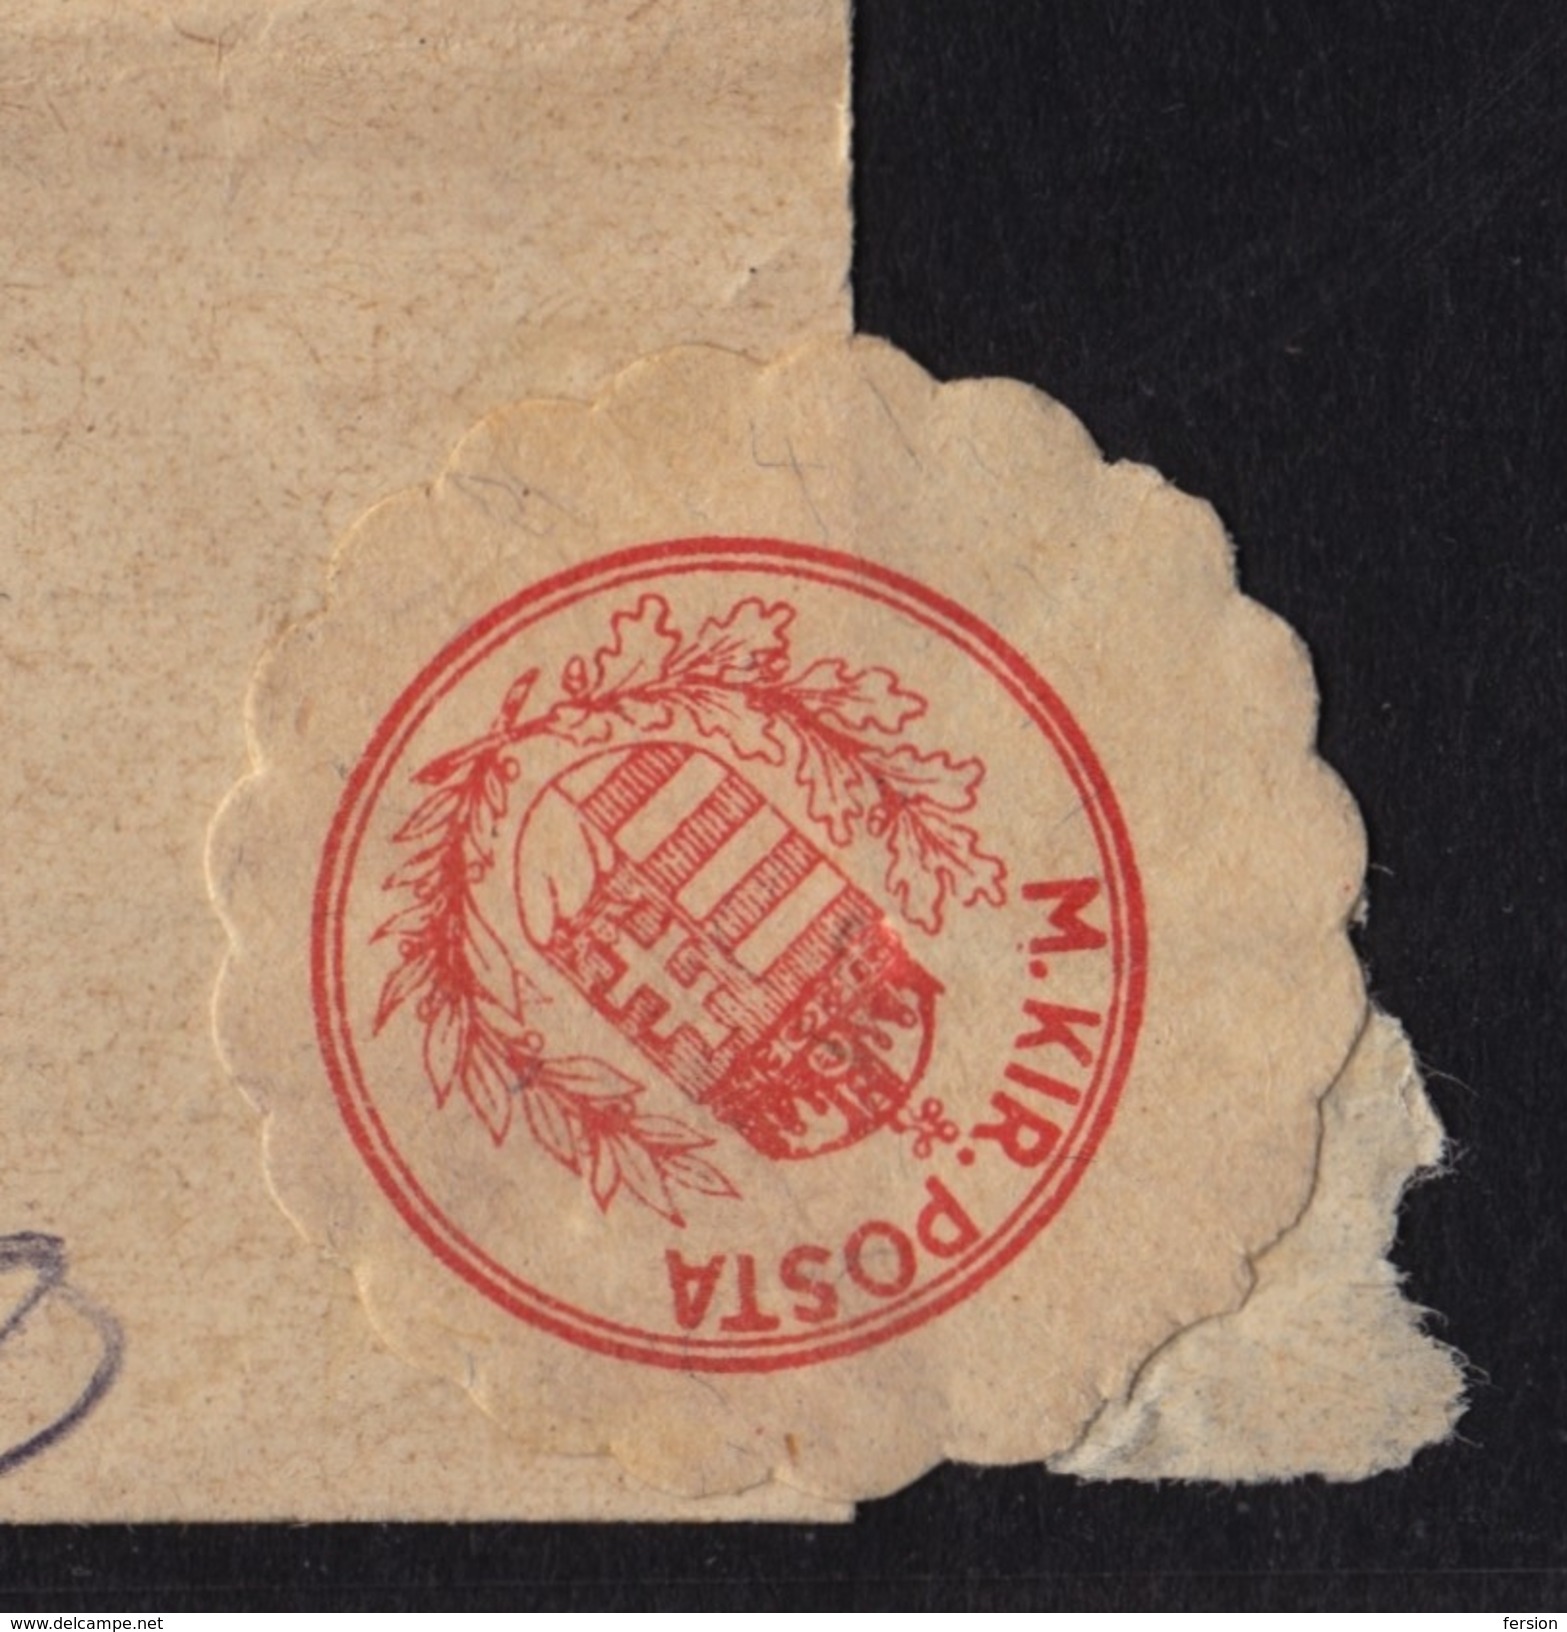 TELEGRAPH TELEGRAM 1943 Hungary - Budapest - Close Label Vignette - 1943 Ed. - Telegraaf